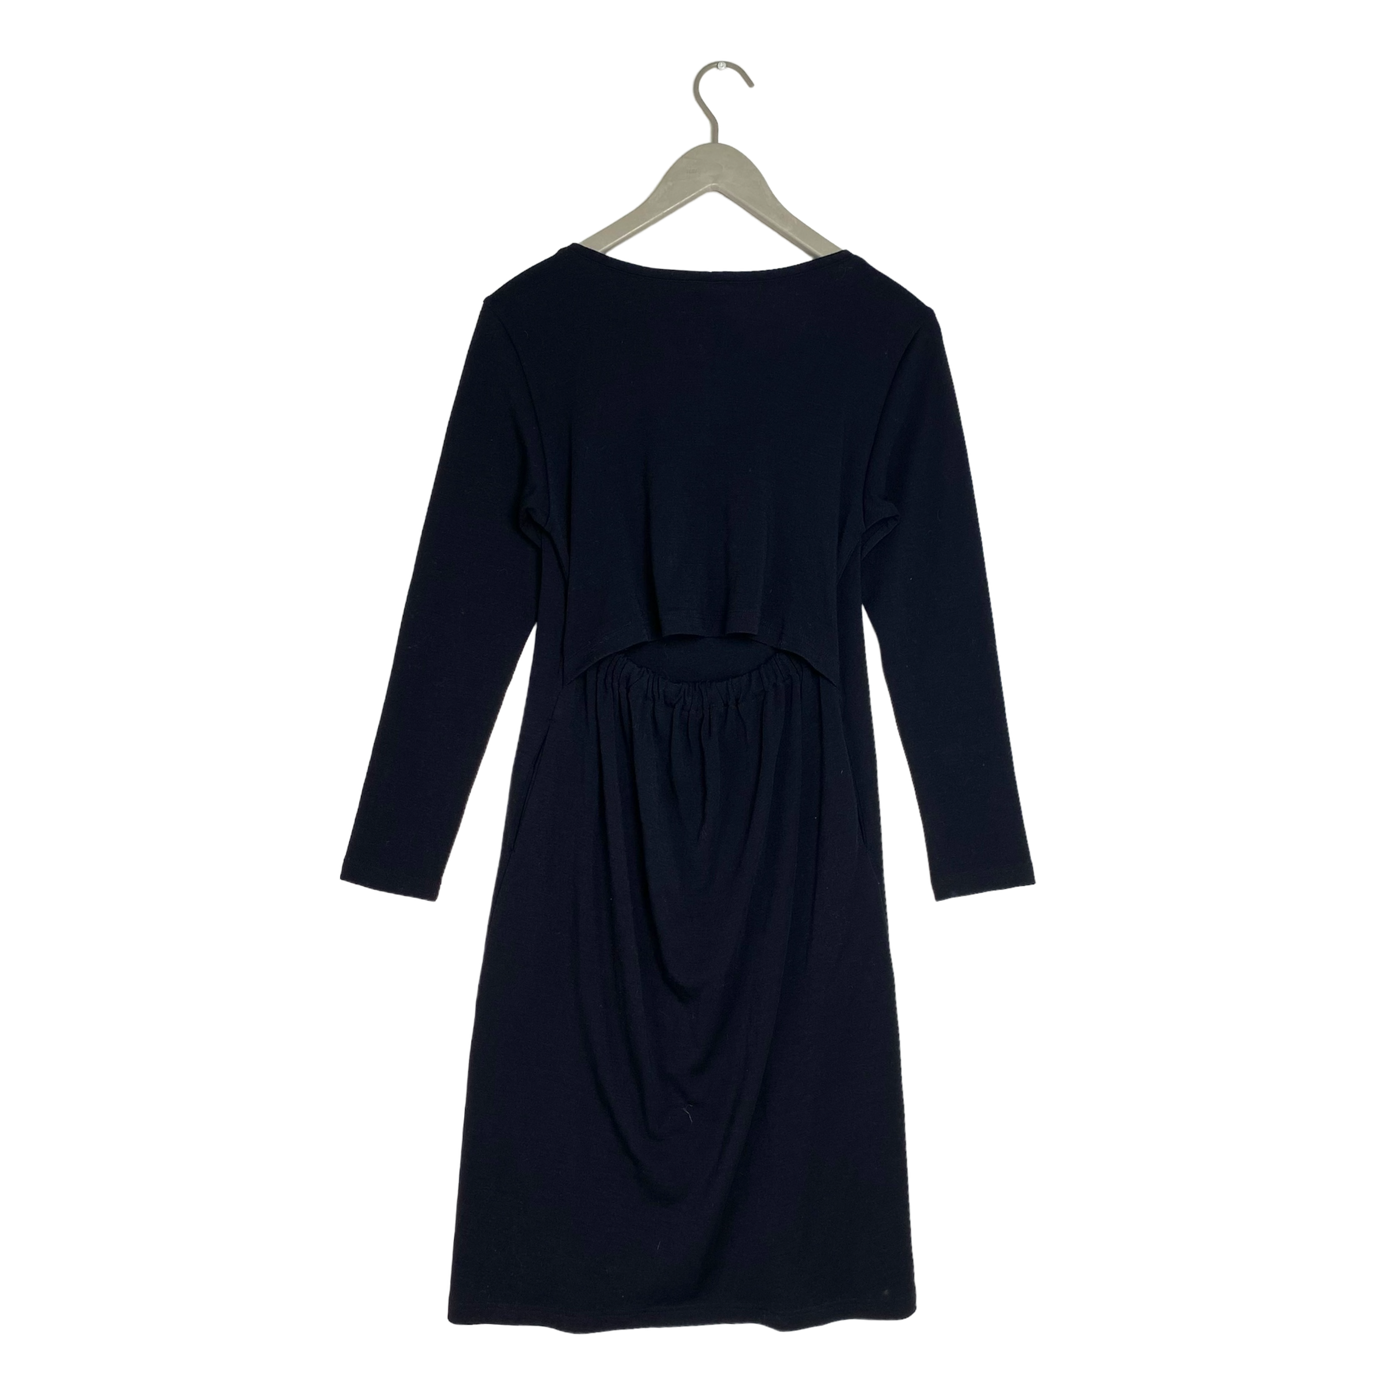 Morico merino ariel dress, black | women S